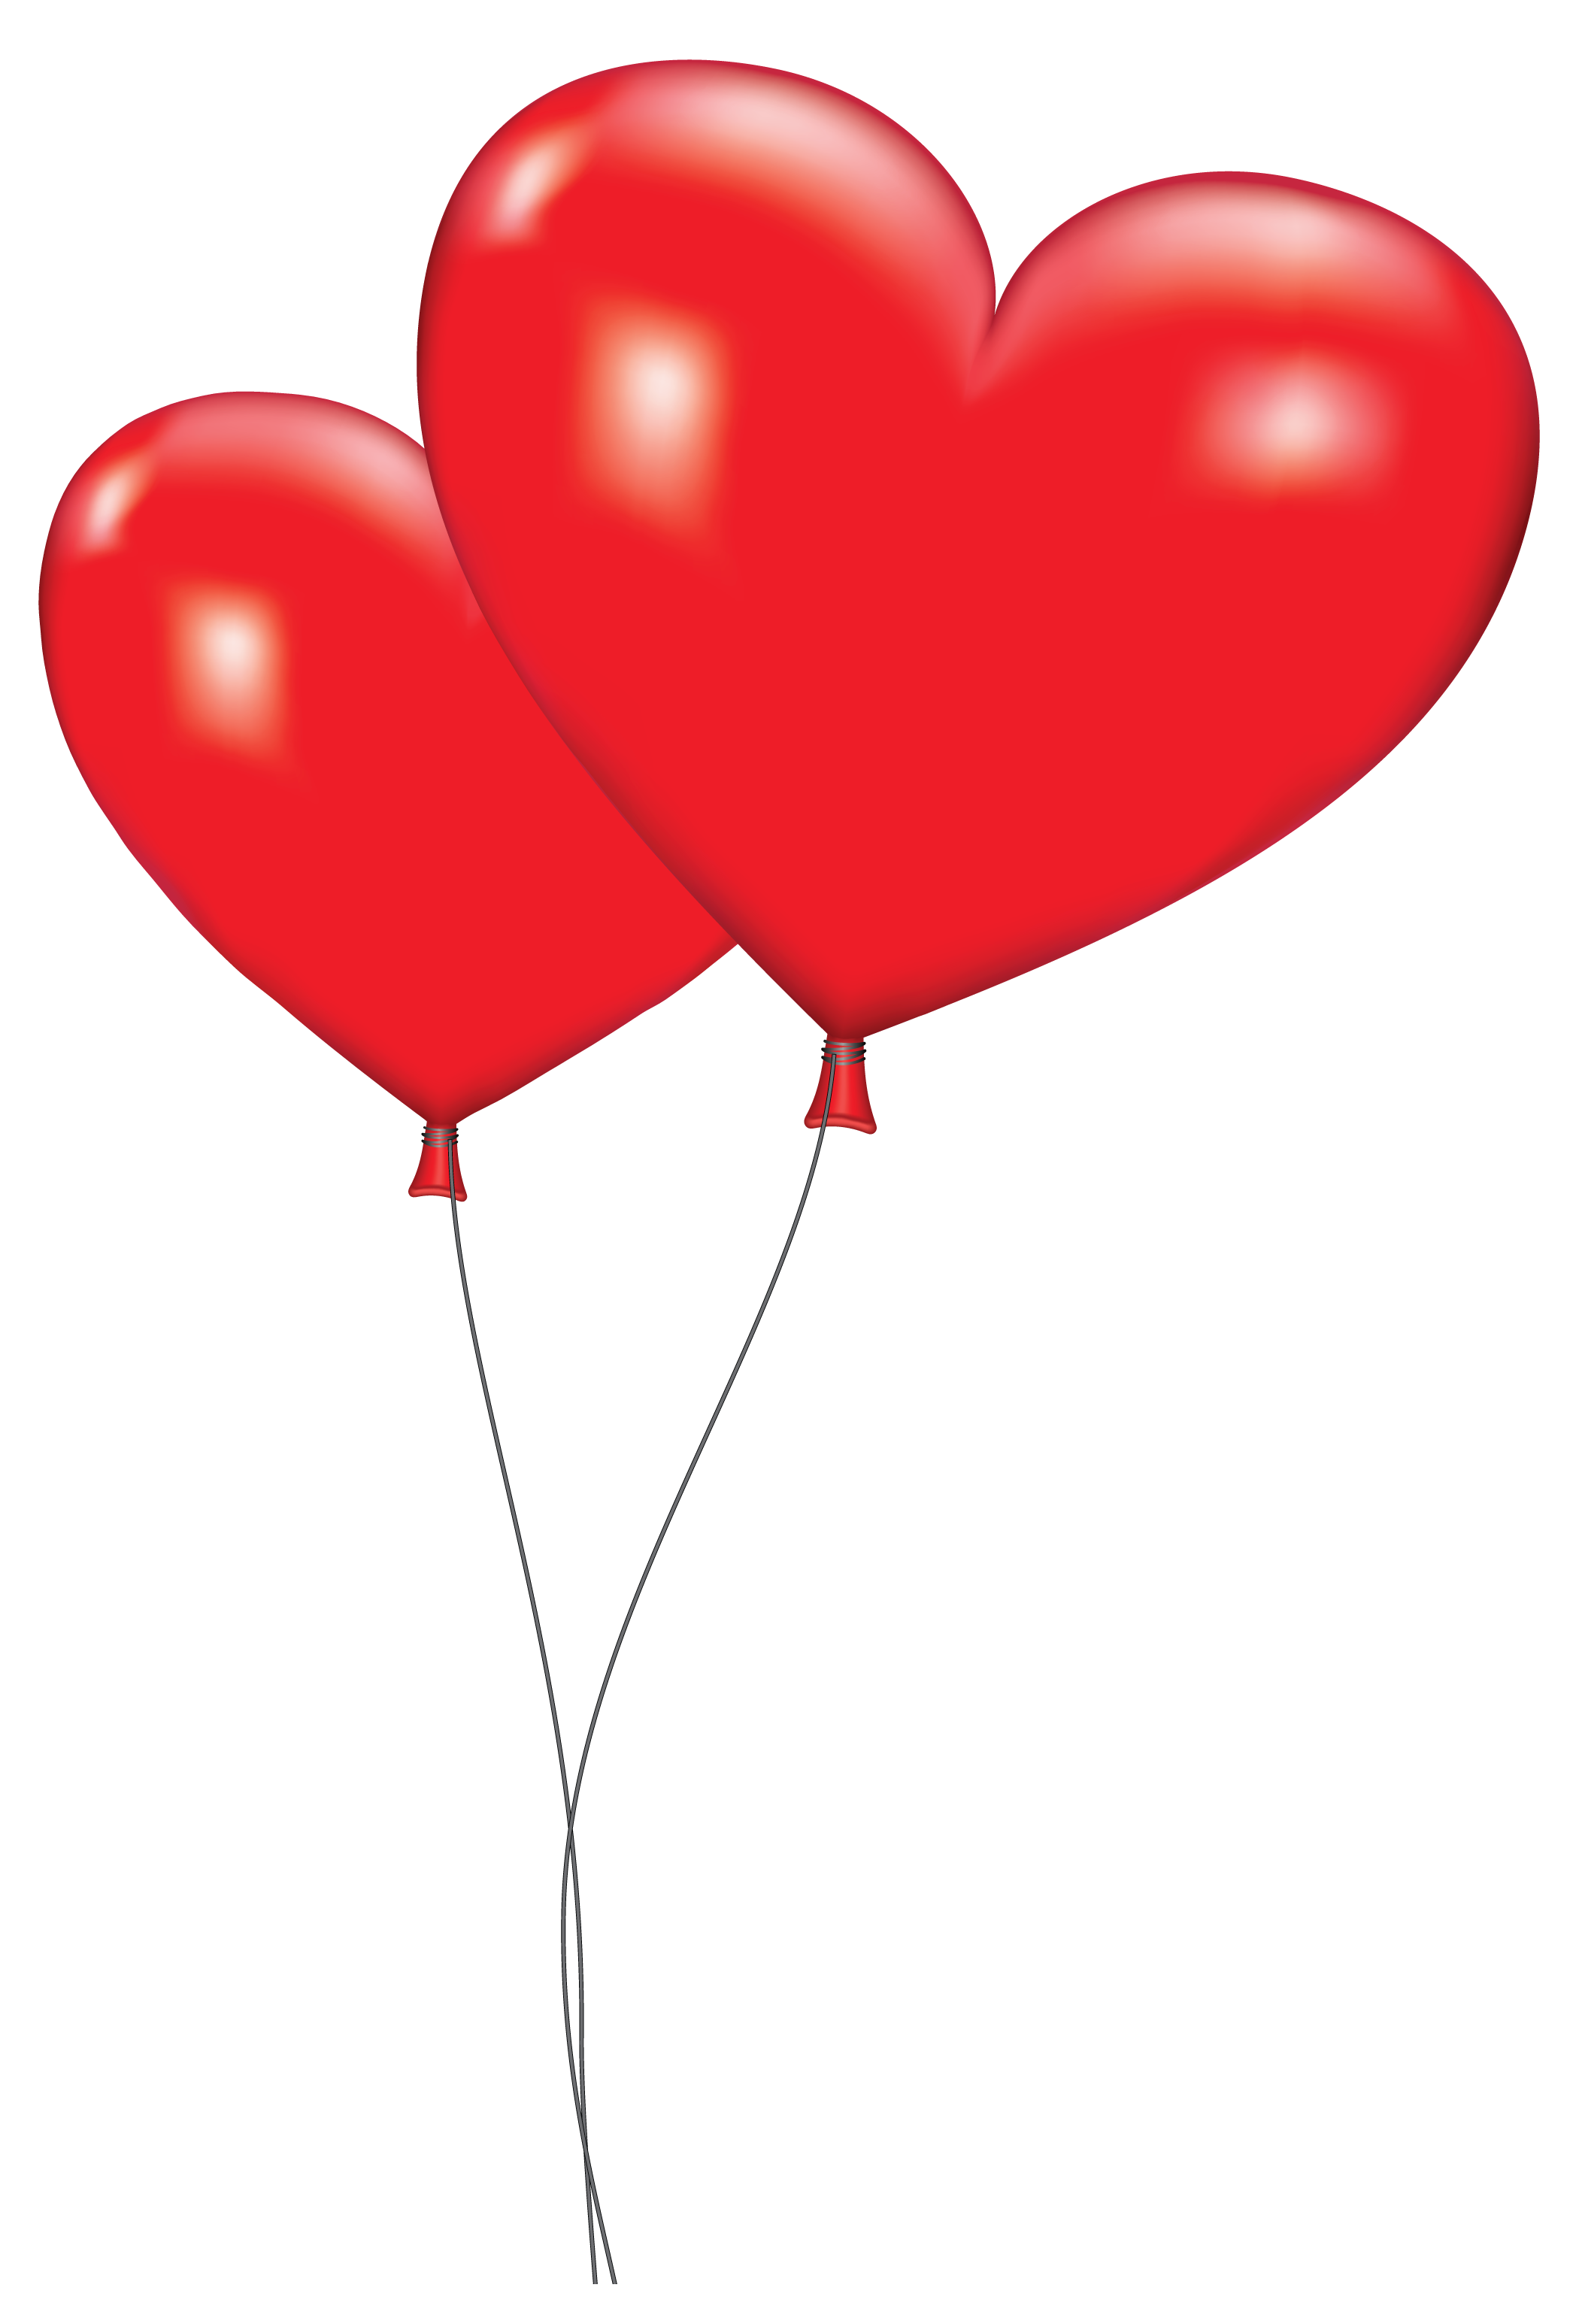 Heart balloon clipart - ClipartFox